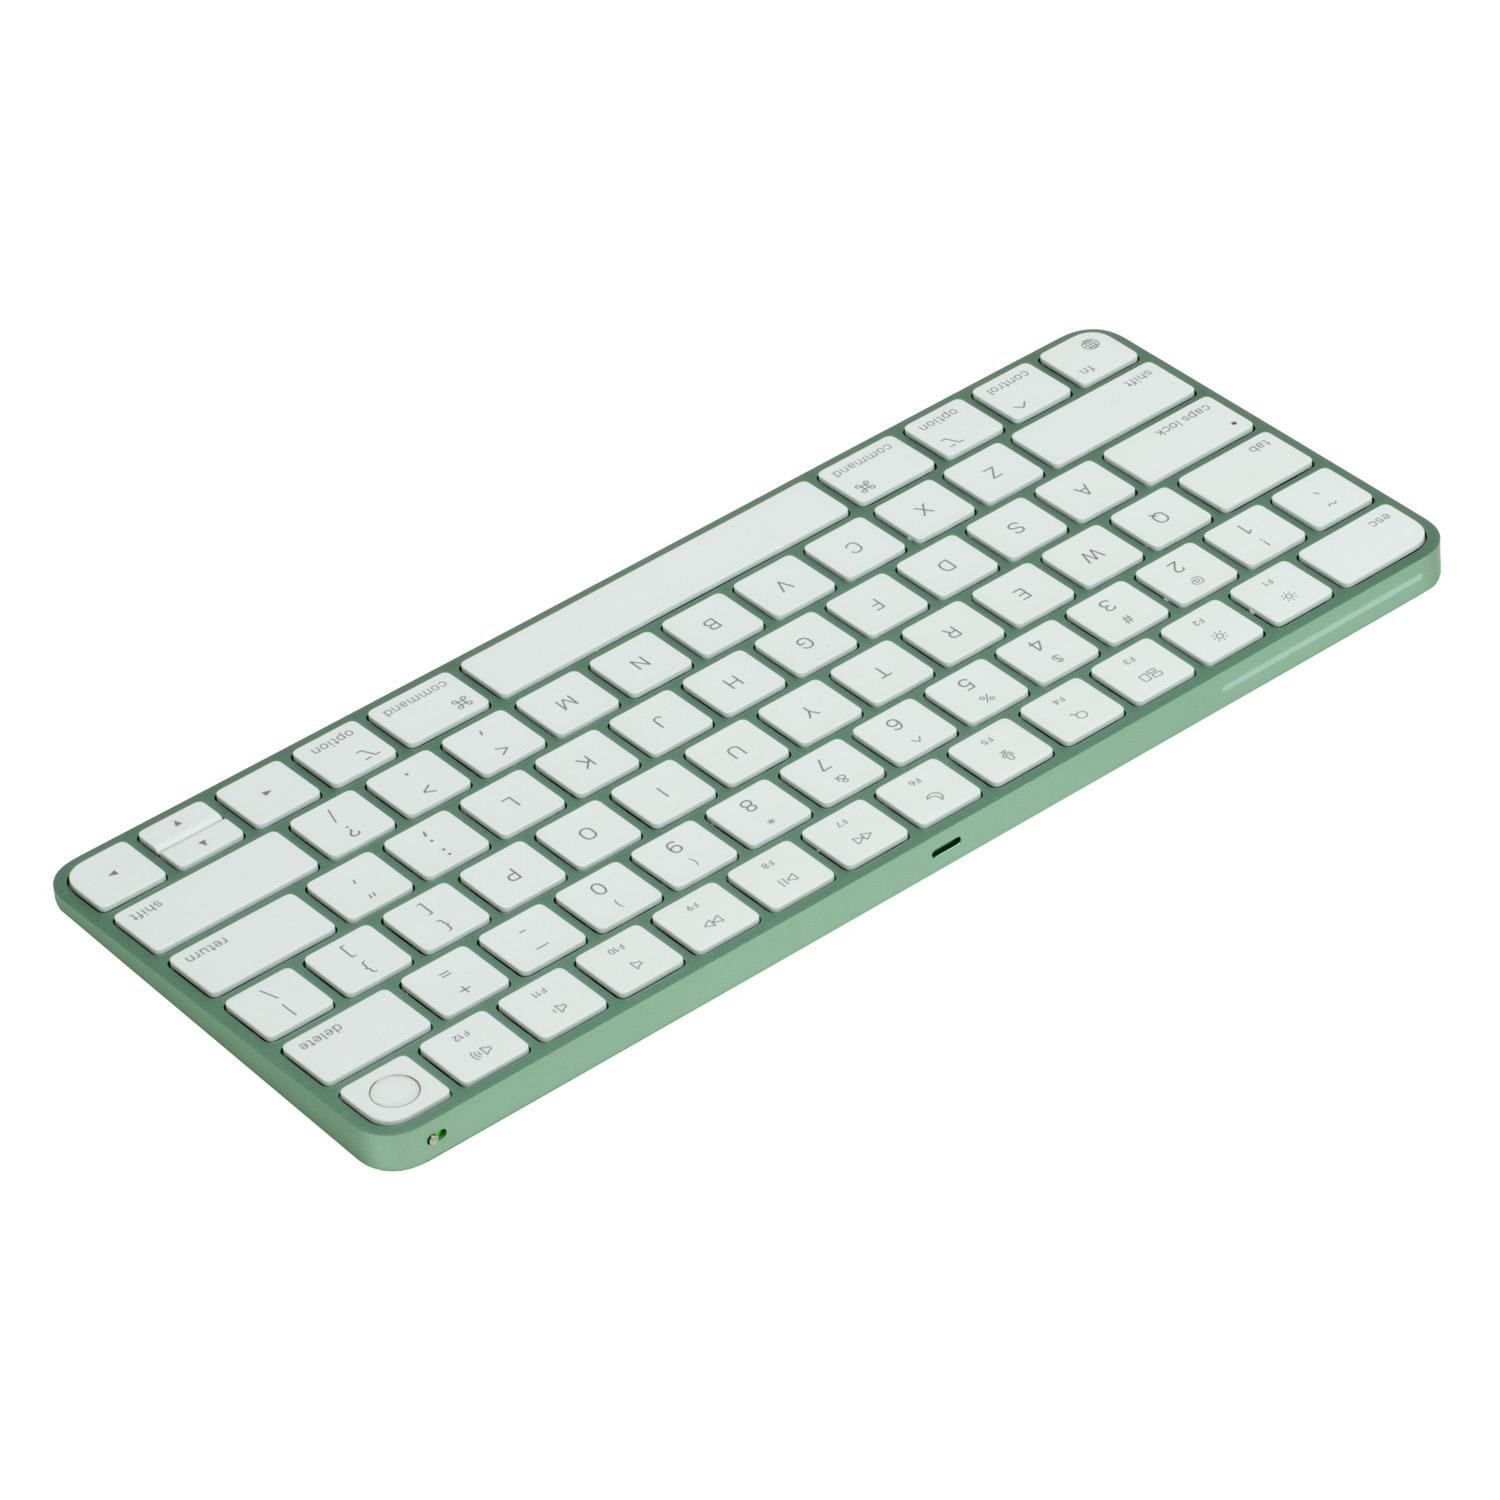 Apple MK293LL/A Magic Keyboard with Touch ID at MacSales.com